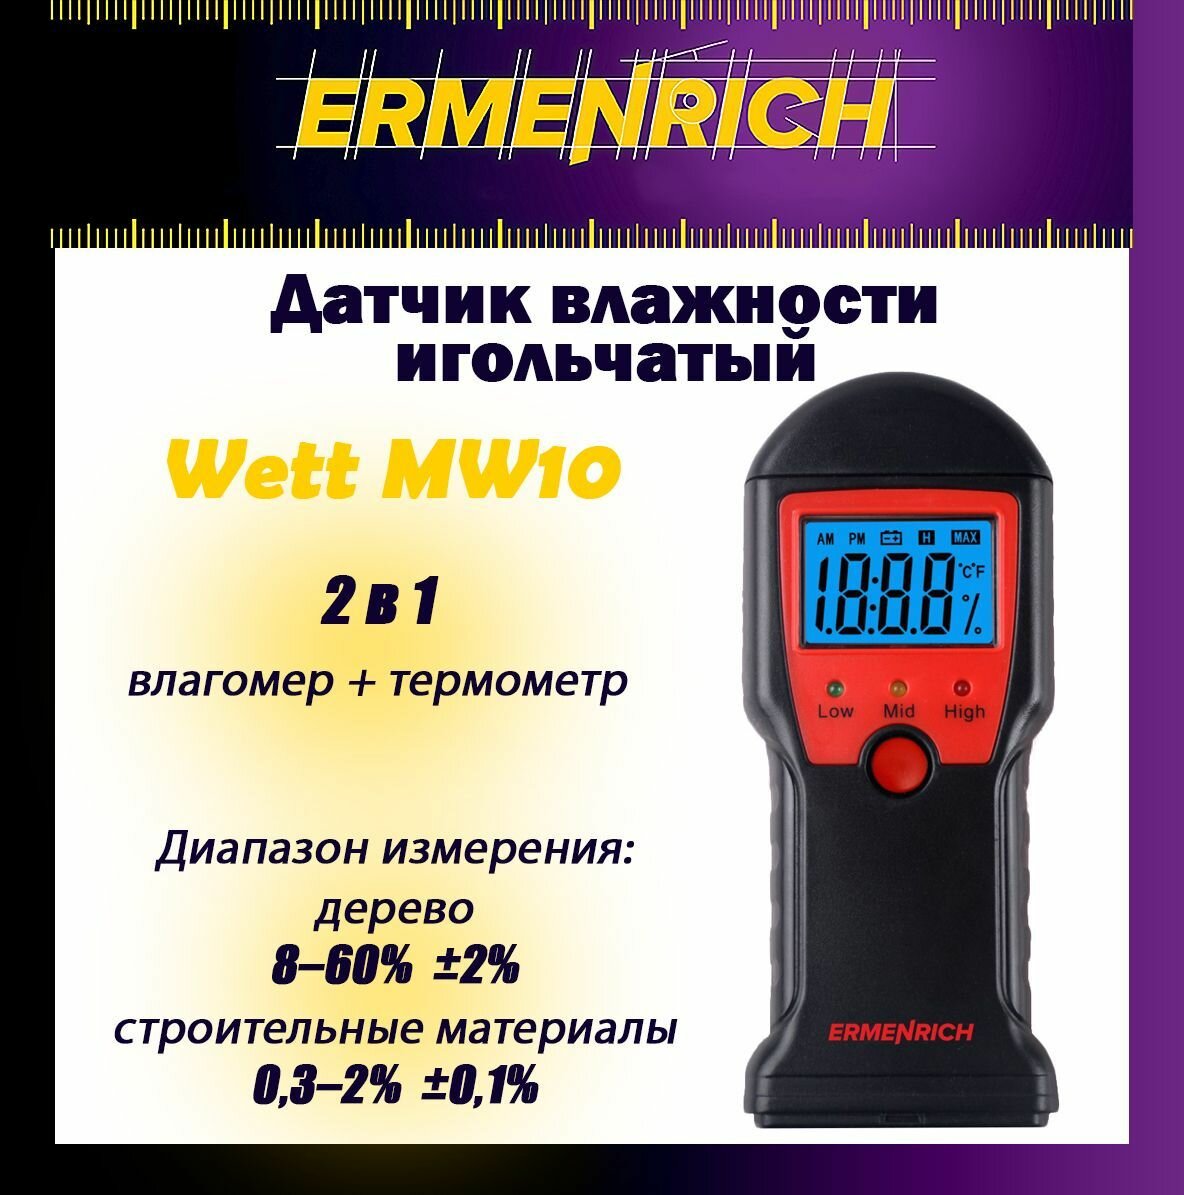 Датчик влажности Ermenrich Wett MW10